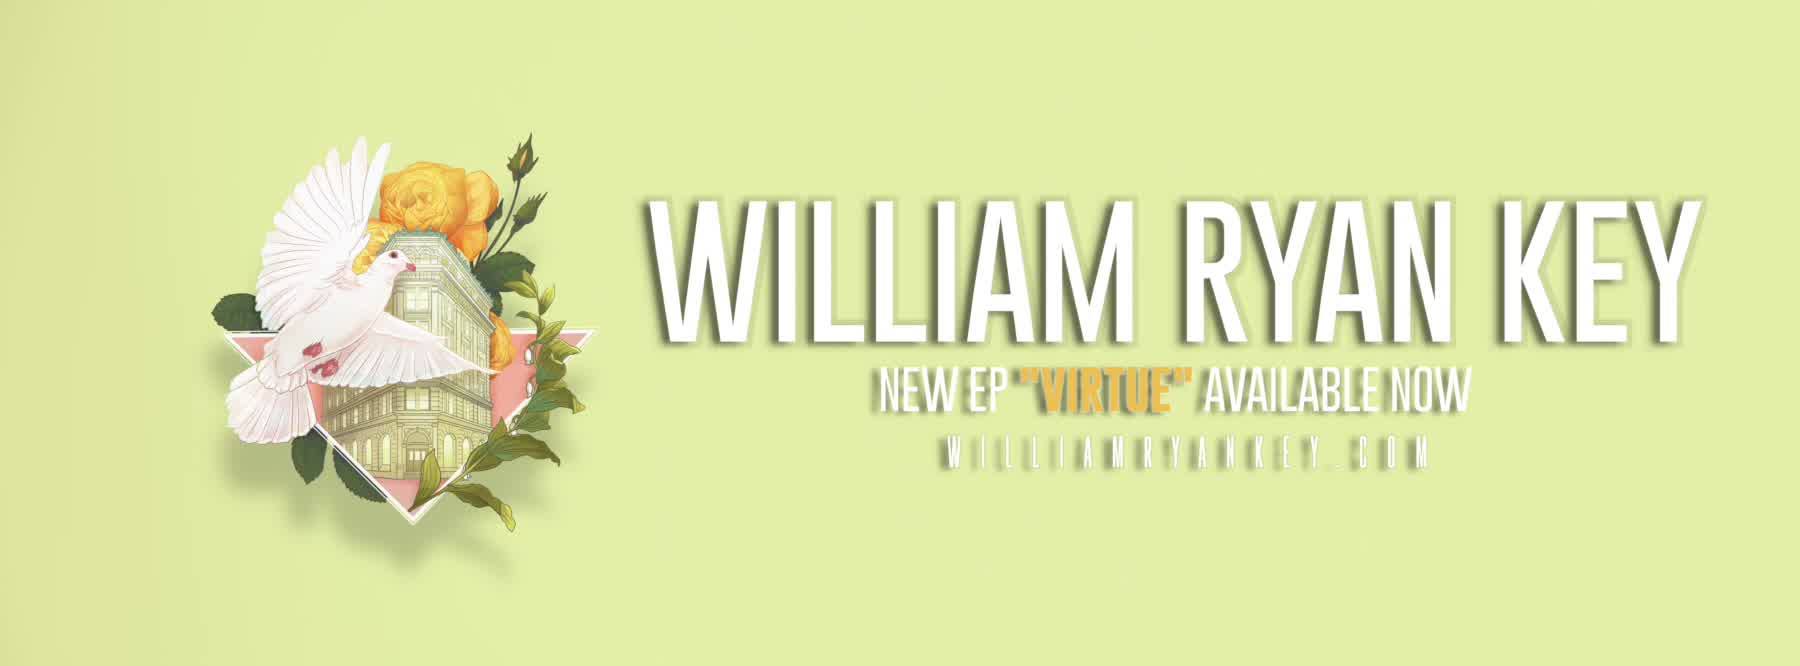 William Ryan Key’s “Virtue” release